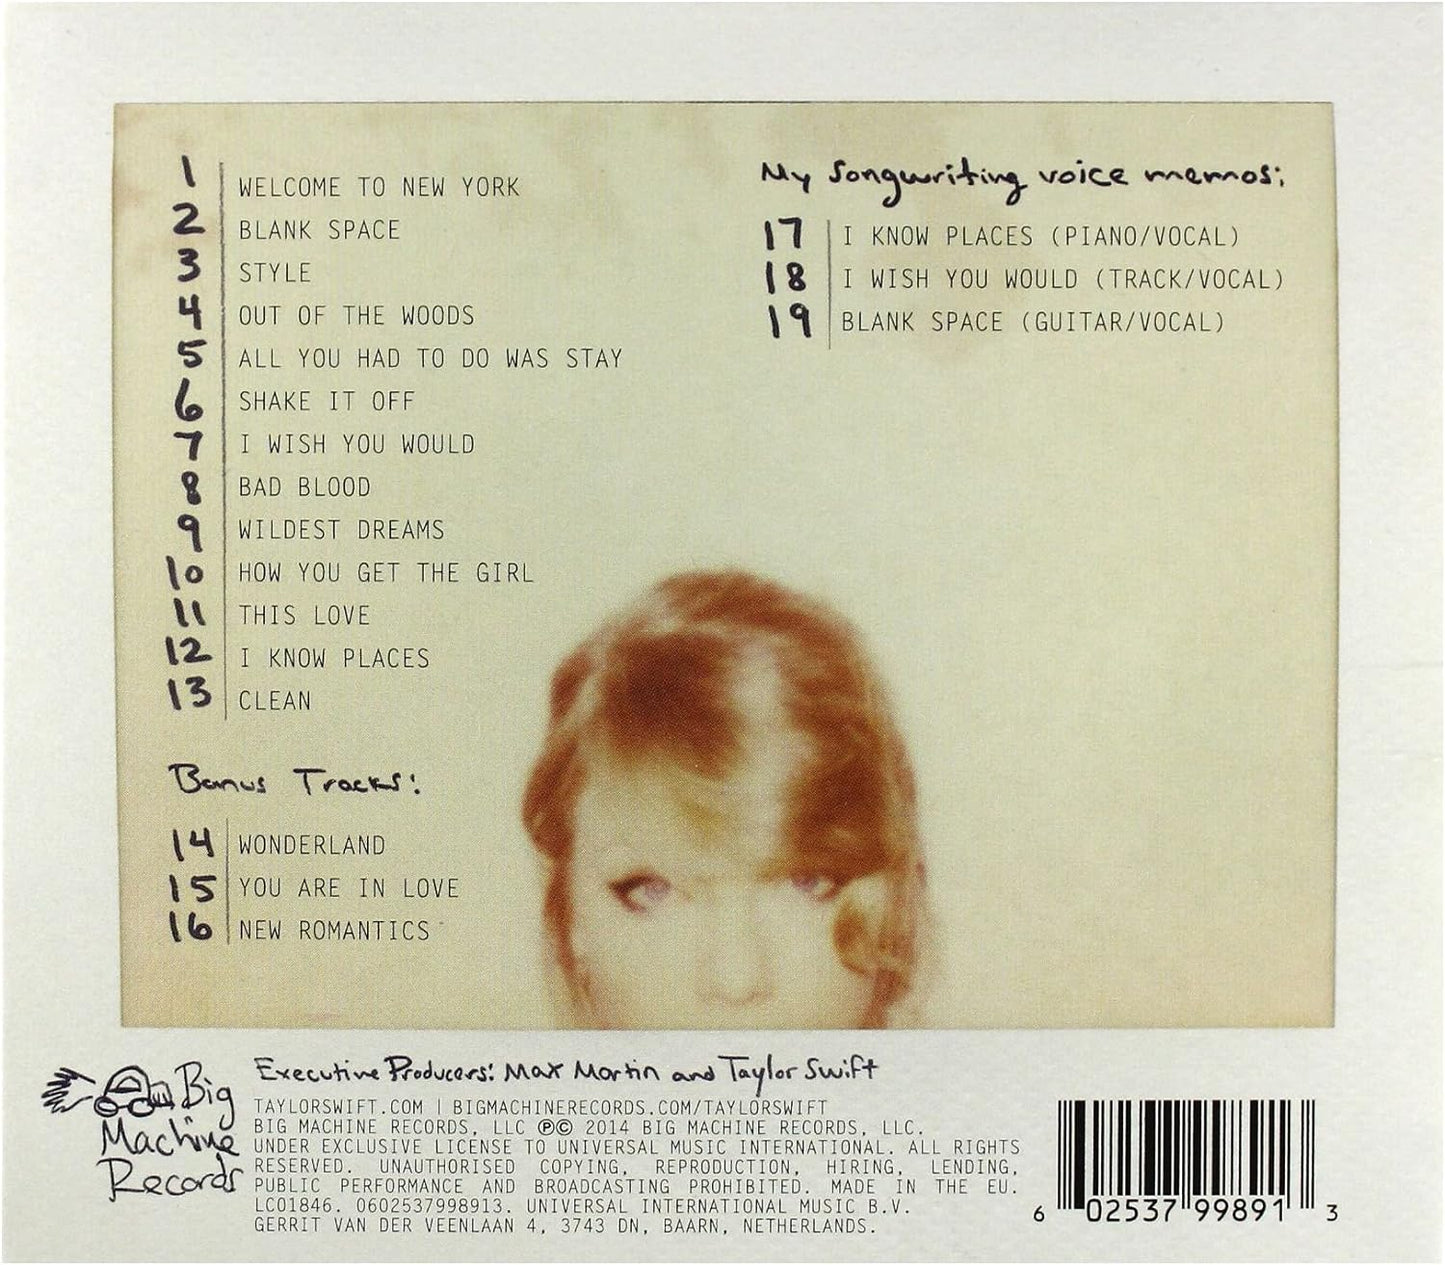 Taylor Swift - 1989 DLX CD